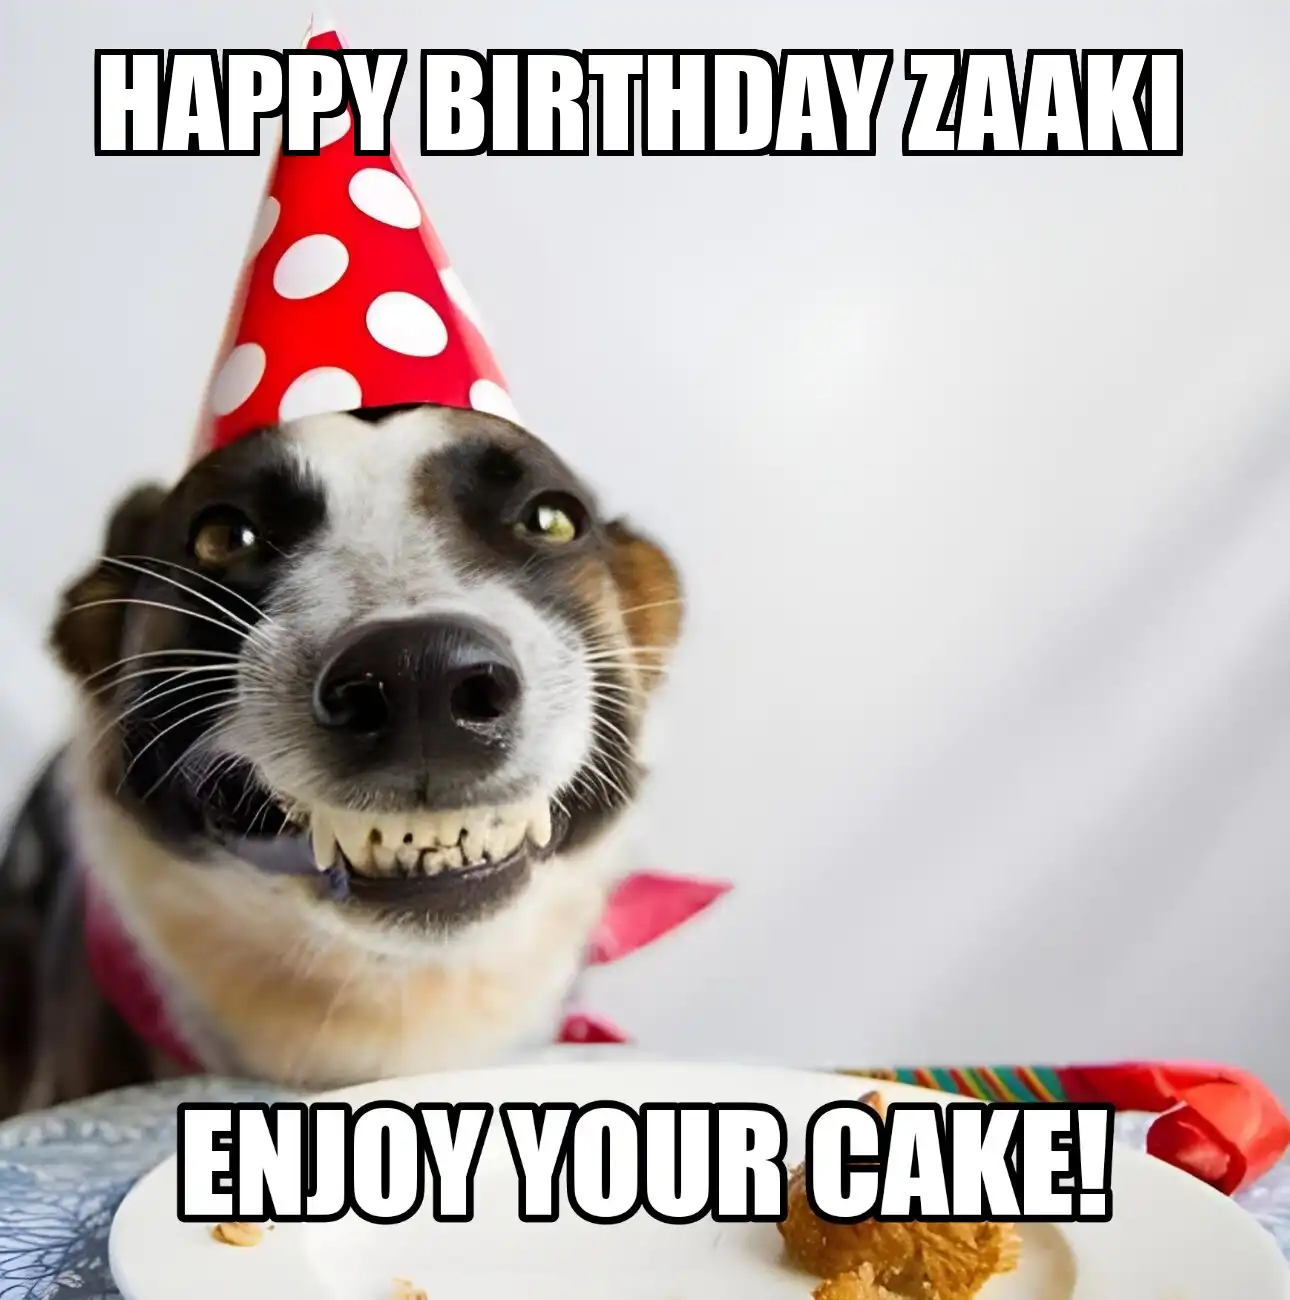 Happy Birthday Zaaki Enjoy Your Cake Dog Meme